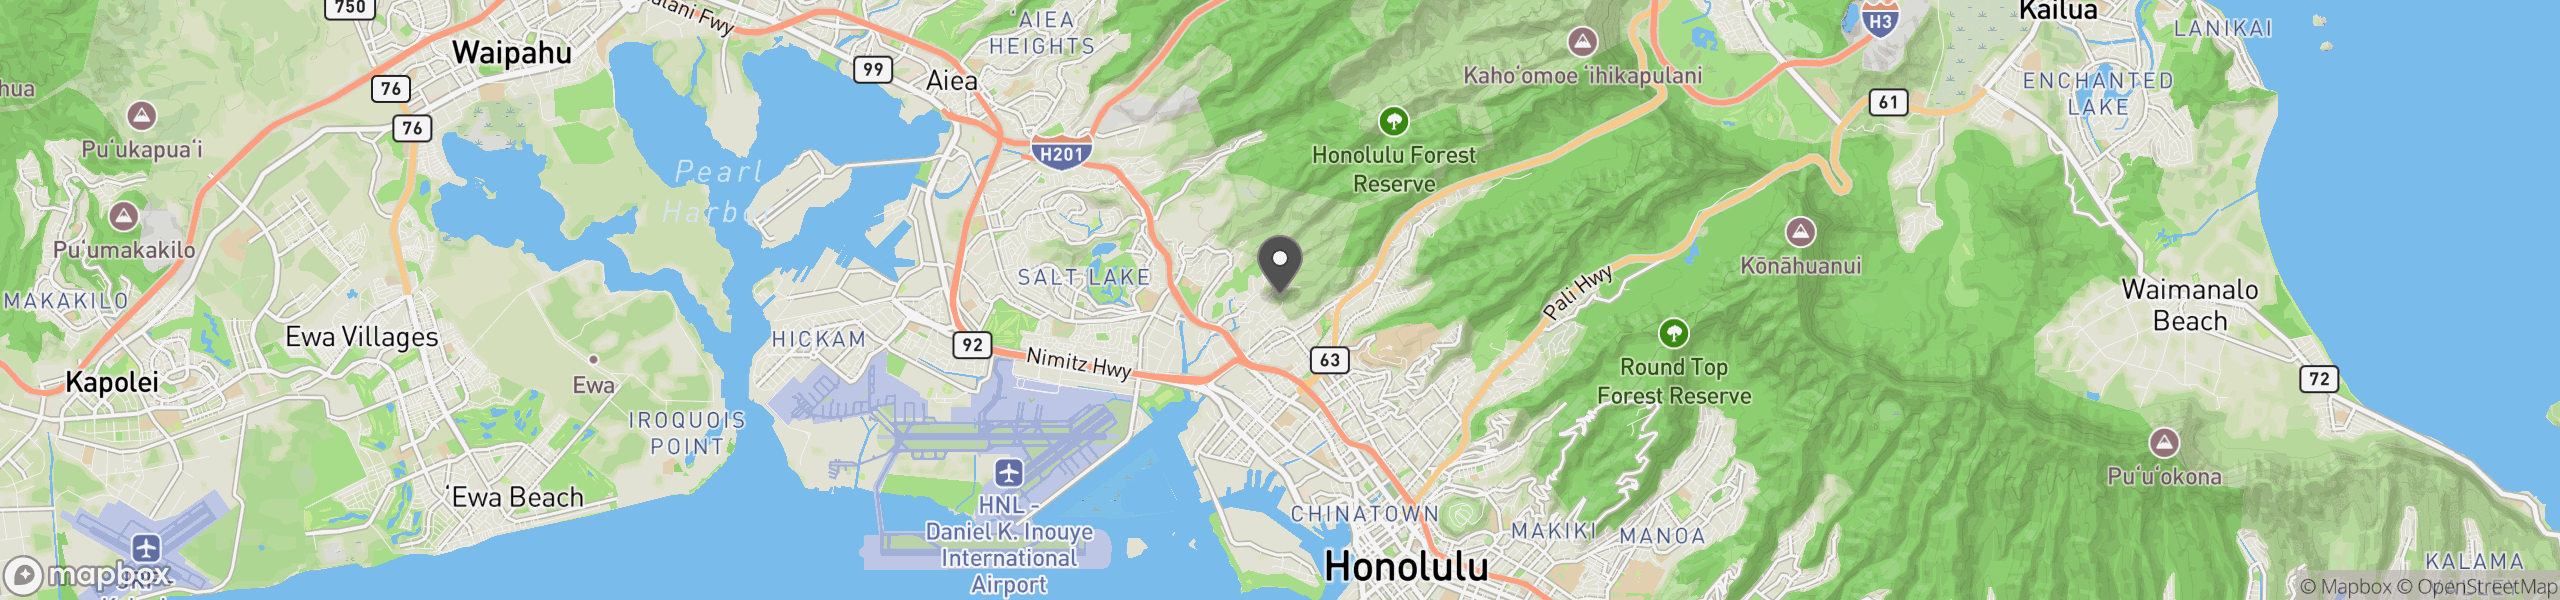 Honolulu, HI 96819